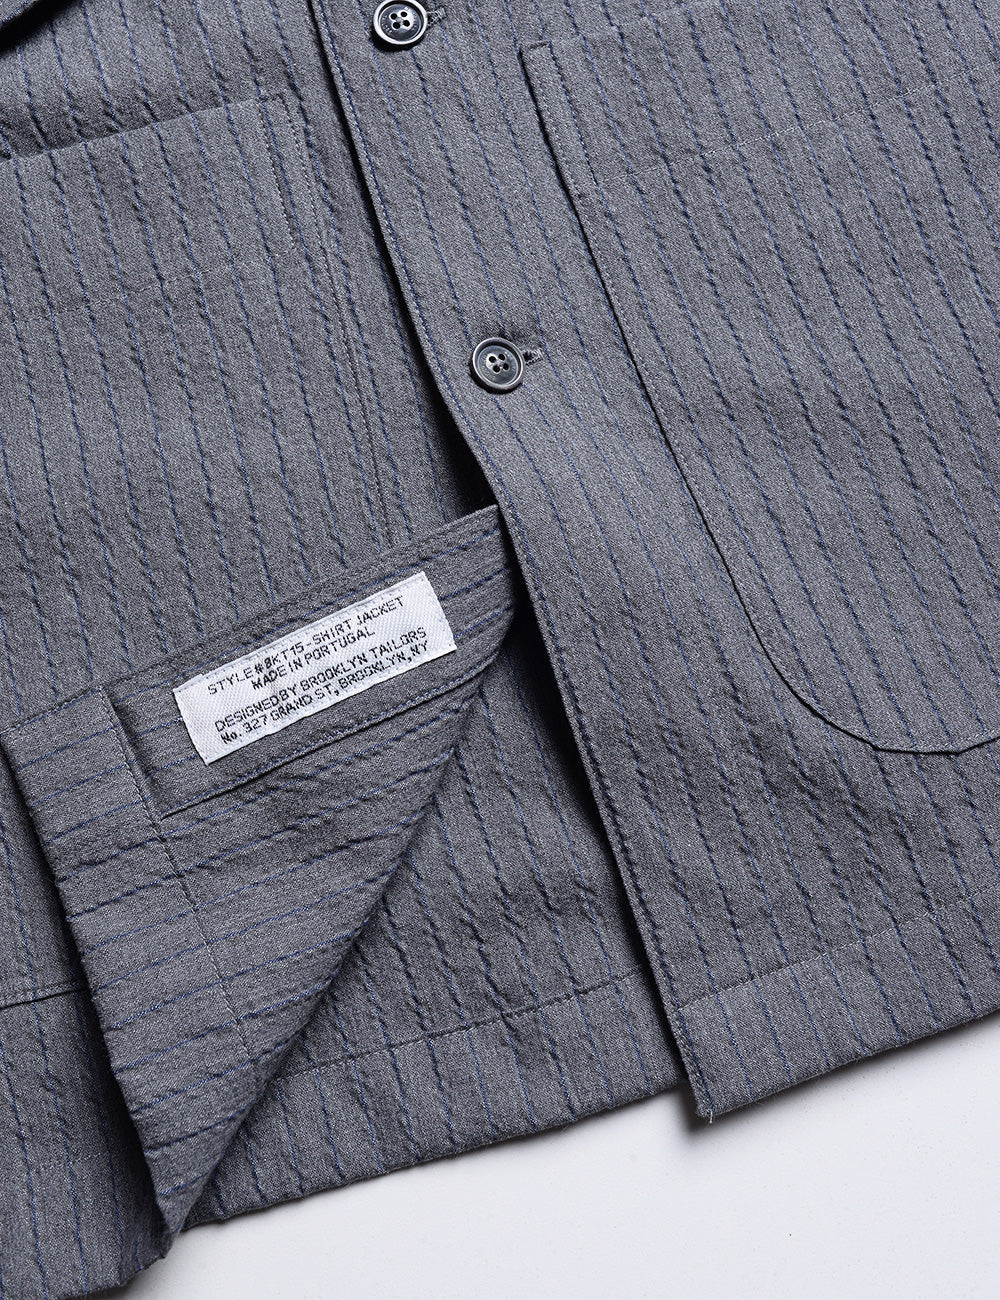 Detail of BKT15 Shirt Jacket in Cotton Seersucker - Thunder Stripe showing hem and interior labeling